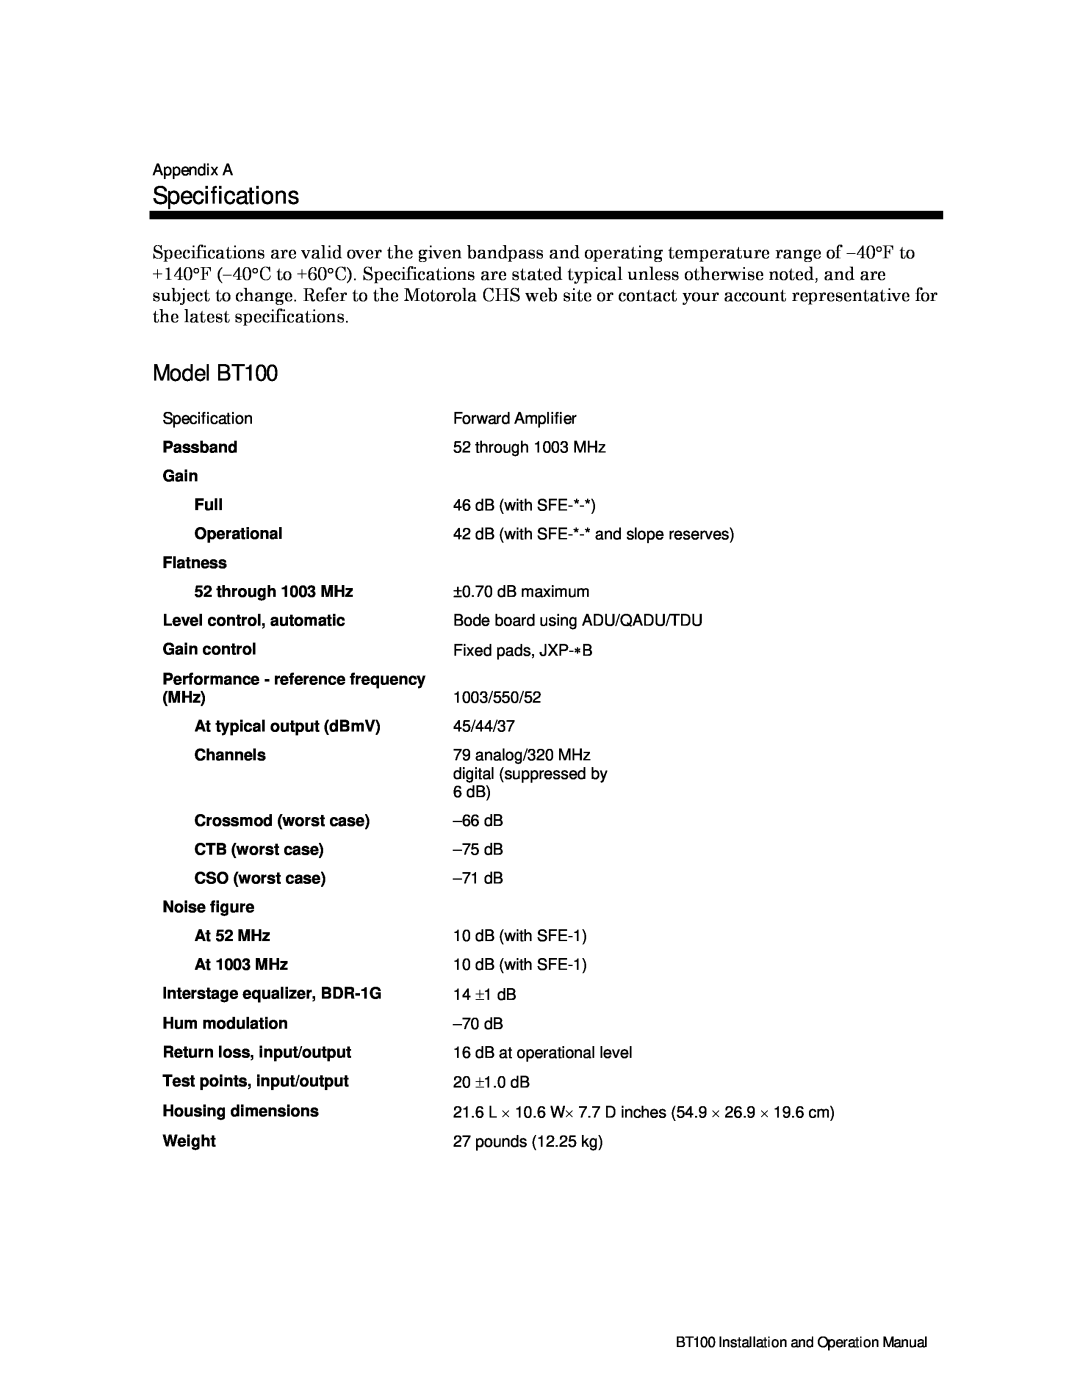 Motorola operation manual Specifications, Model BT100, Forward Amplifier, Appendix A 